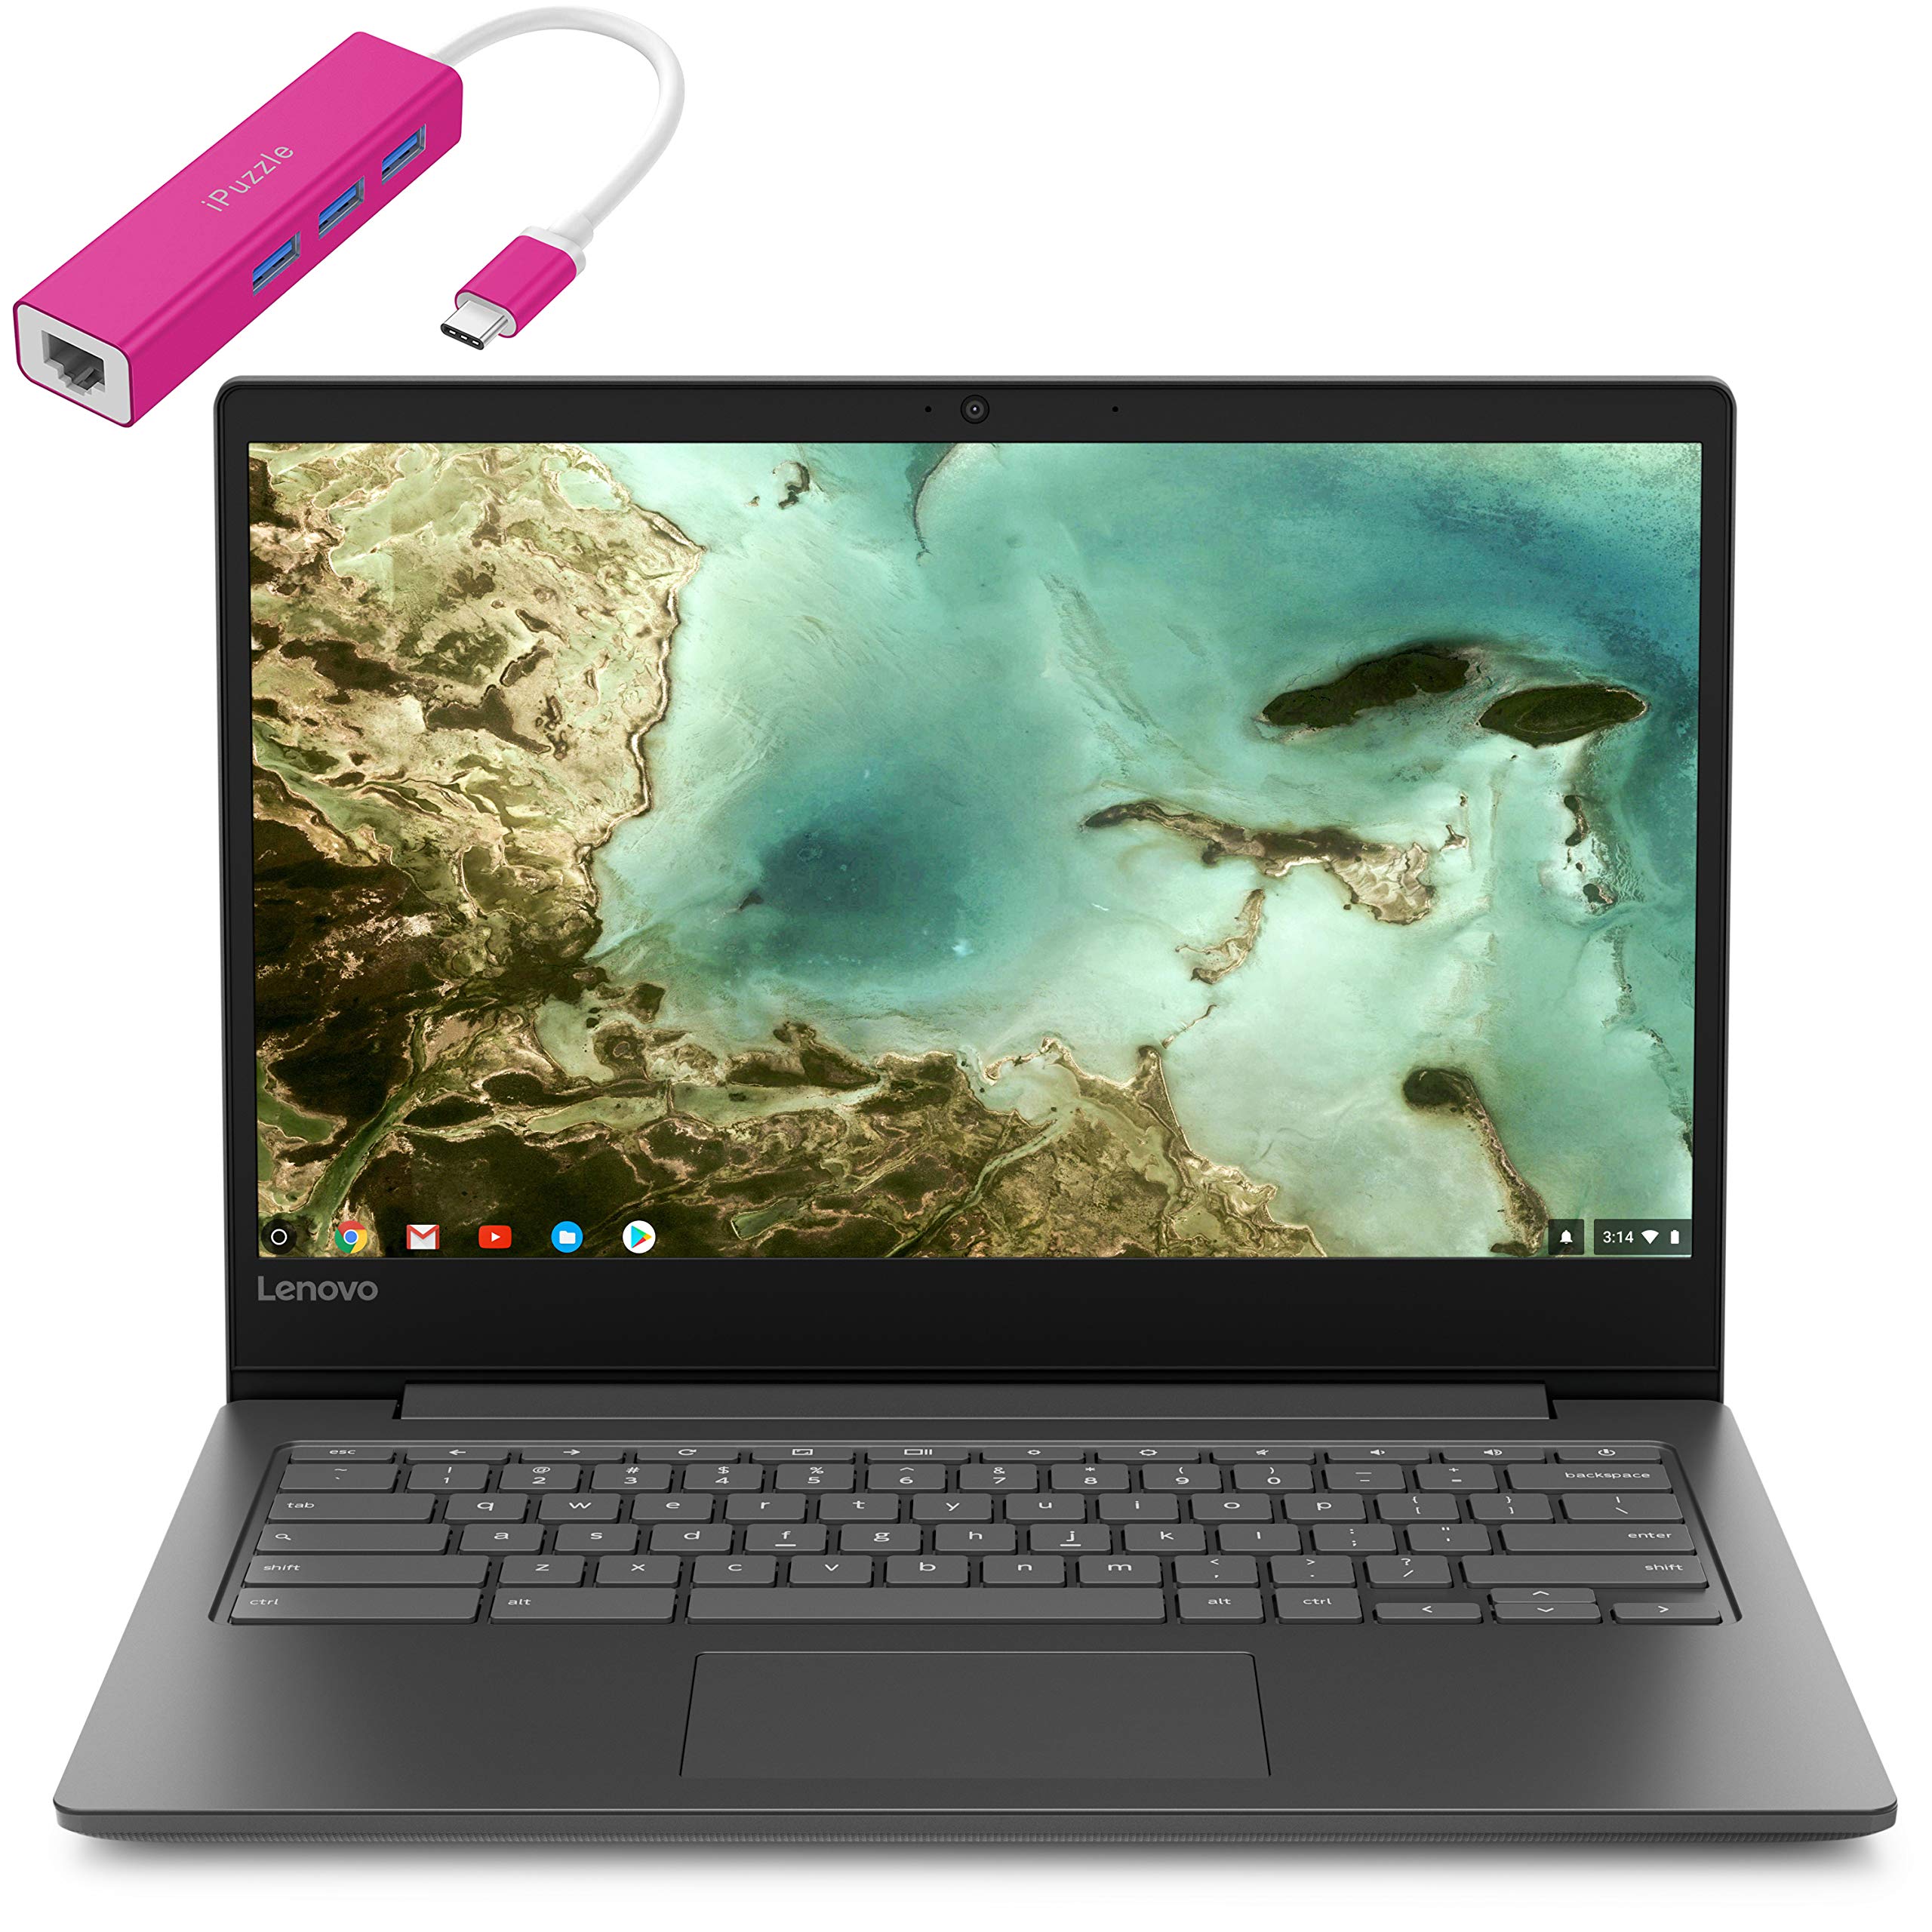 Lenovo Chromebook S330 14" Laptop Computer for Business Student, Quad-Core MediaTek MT8173C 2.1GHz, 4GB RAM, 32GB eMMC, 802.11ac WiFi, Bluetoot...